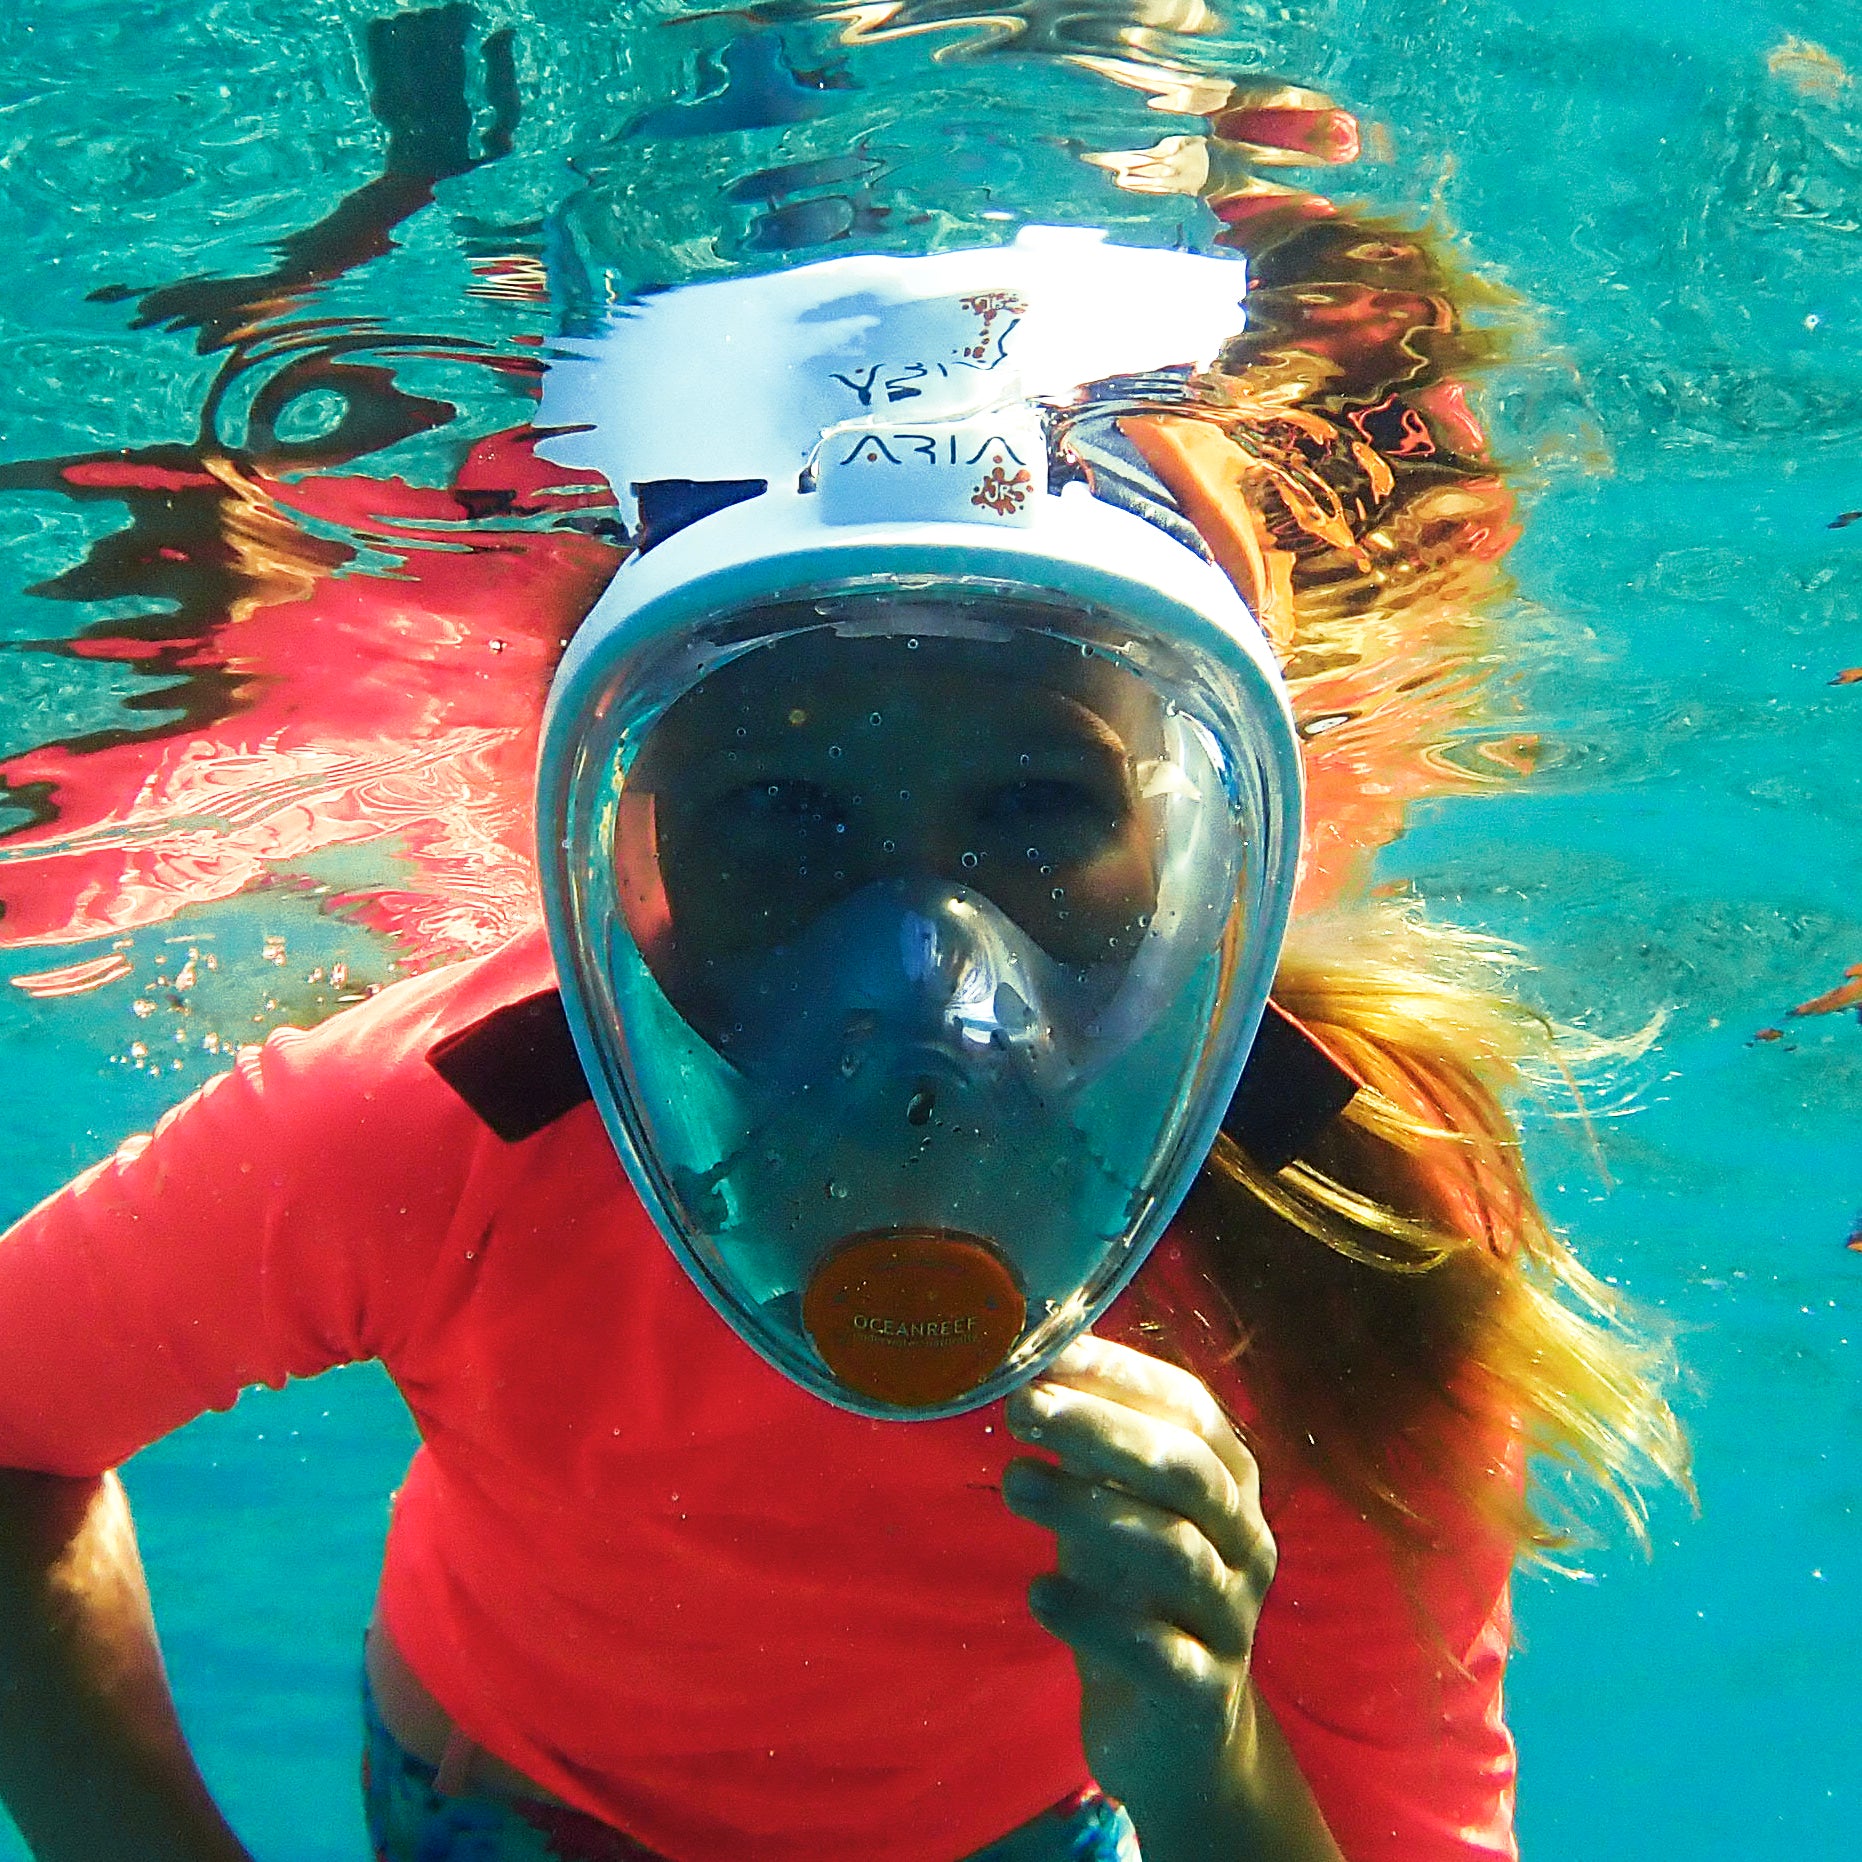 Ocean Reef ARIA Junior Full Face Snorkelling Mask